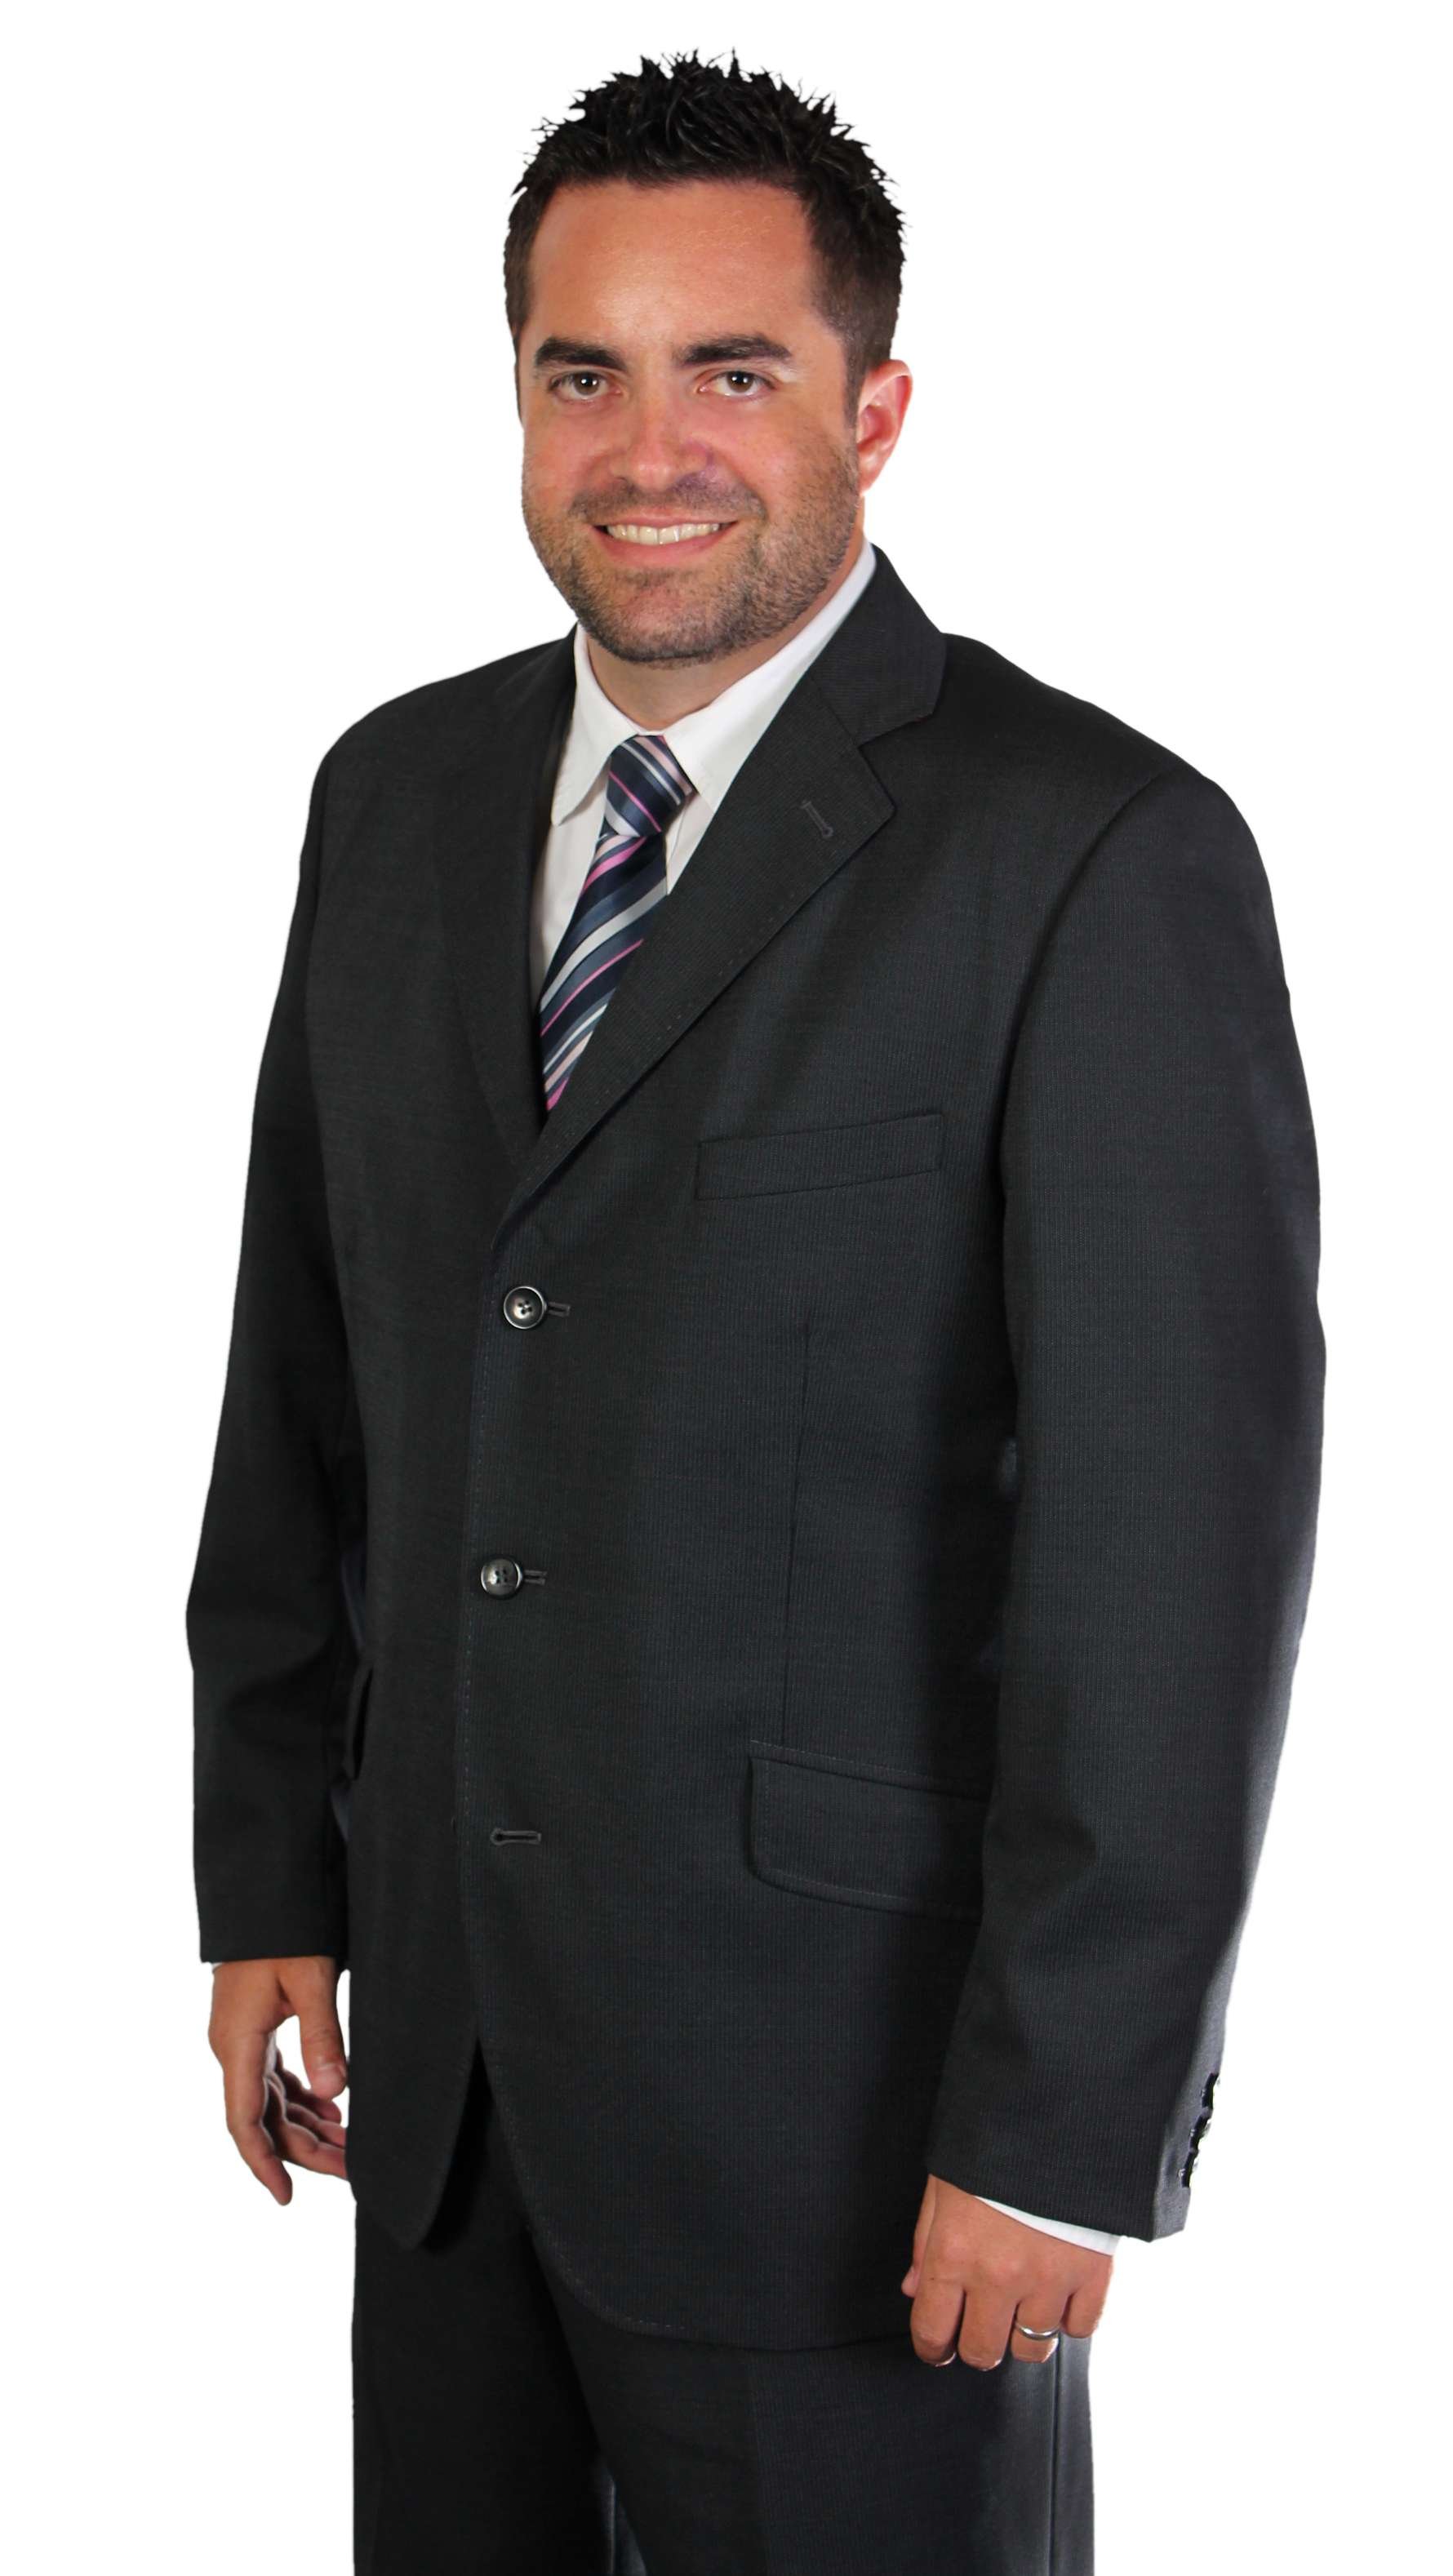 David Rizzo, president for Asia-Pacific